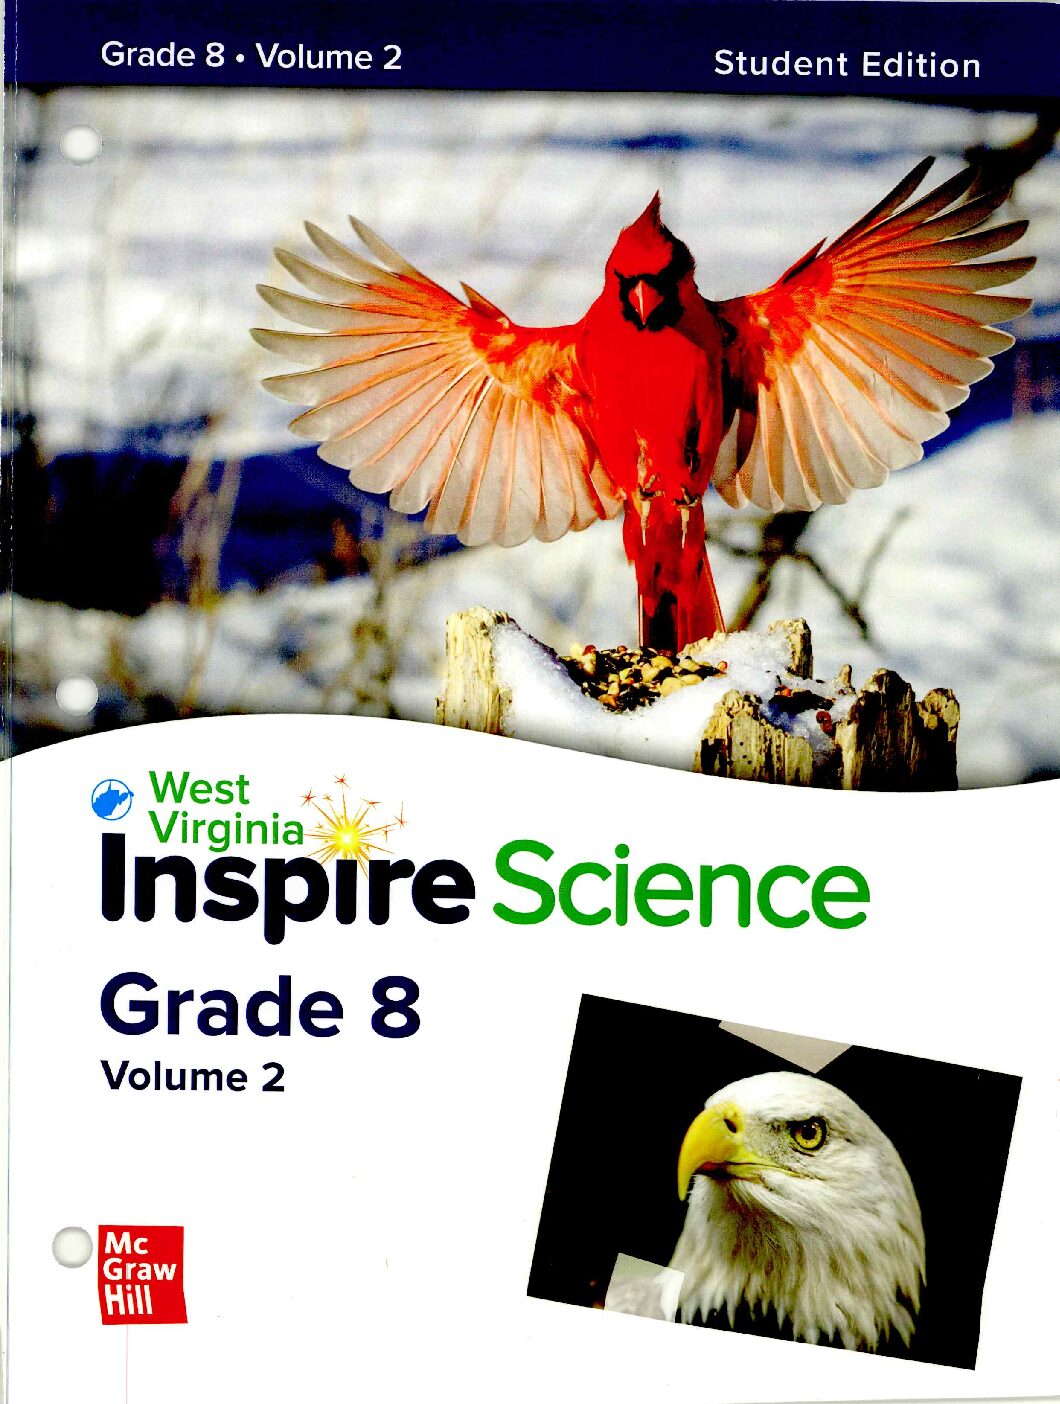 Inspire Science - West Virginia Volume 2